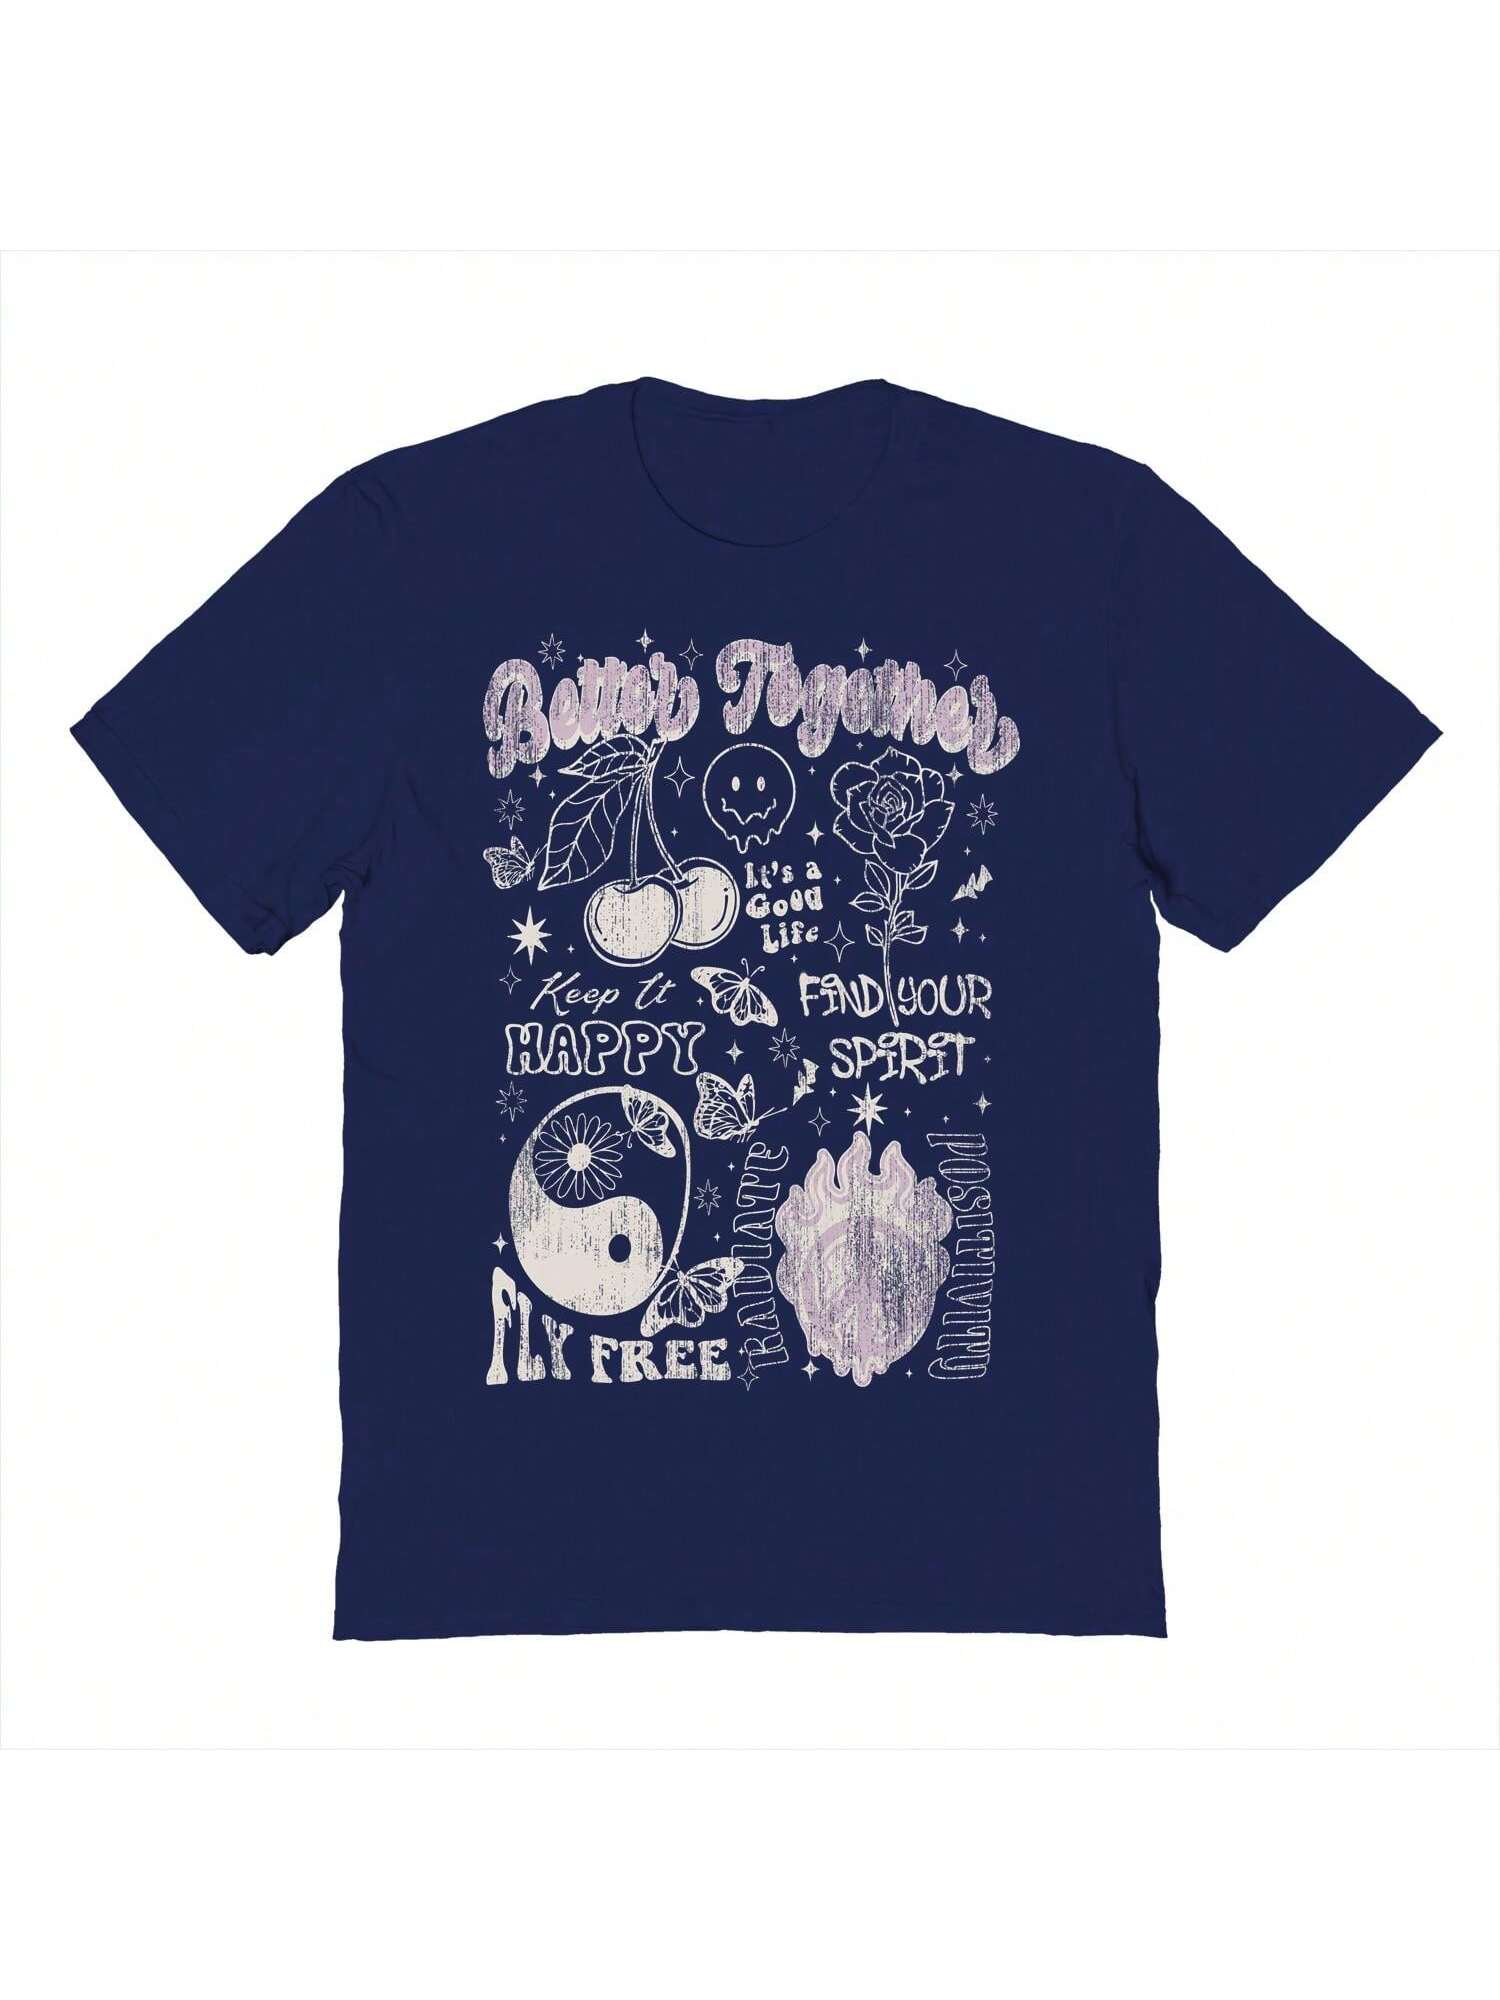 Хлопковая футболка унисекс с короткими рукавами «Почти лучше вместе» с рисунком, темно-синий